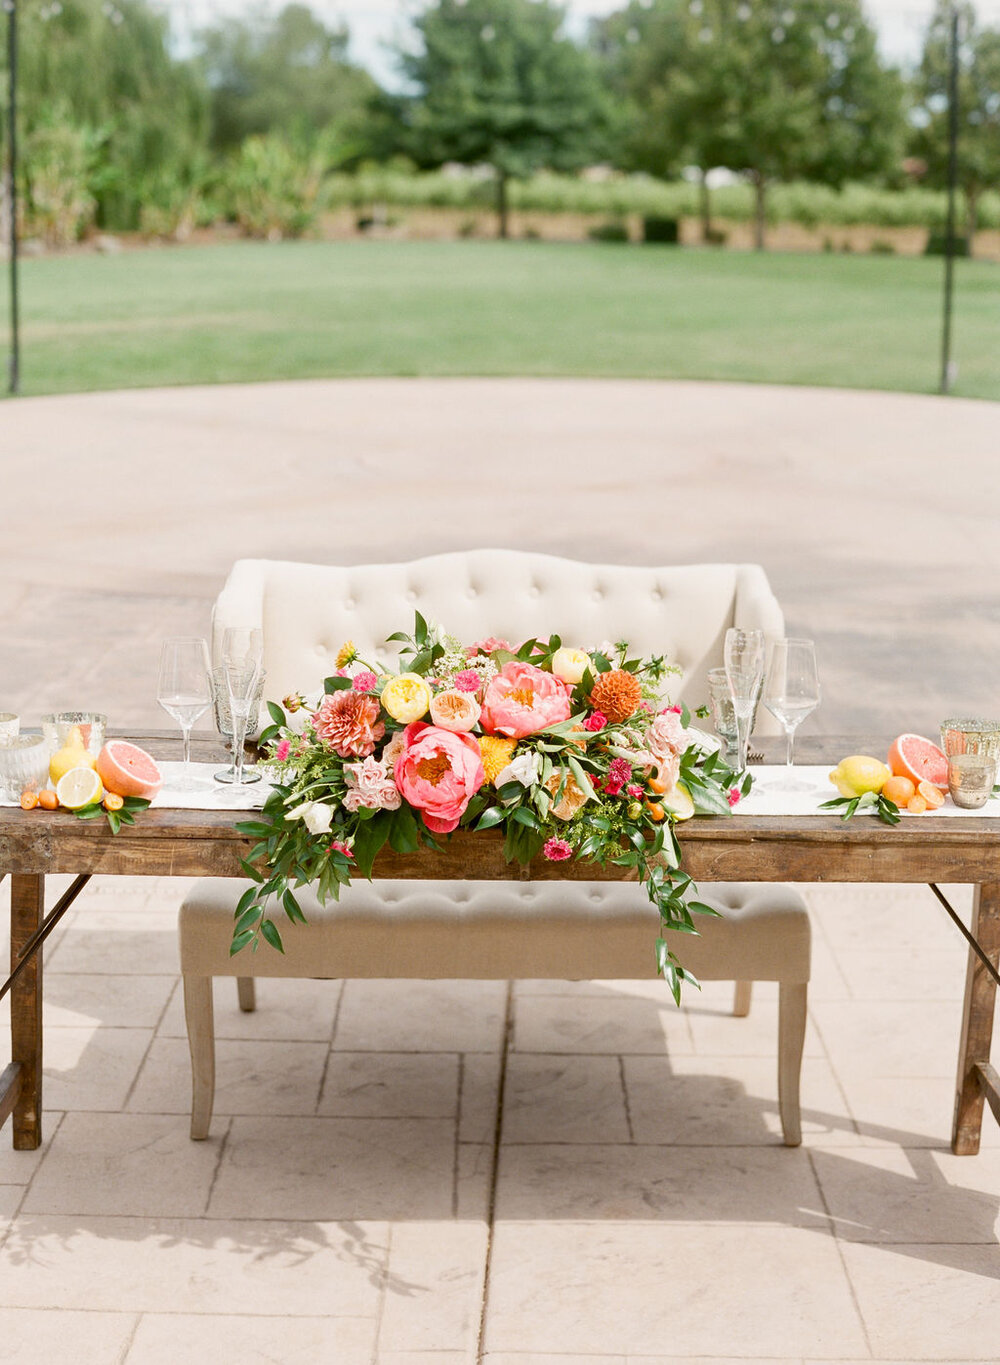 Sweetheart-Table-receptiondetails-Married-AshleyBaumgartner-WeddingDetails-sacramento.jpg